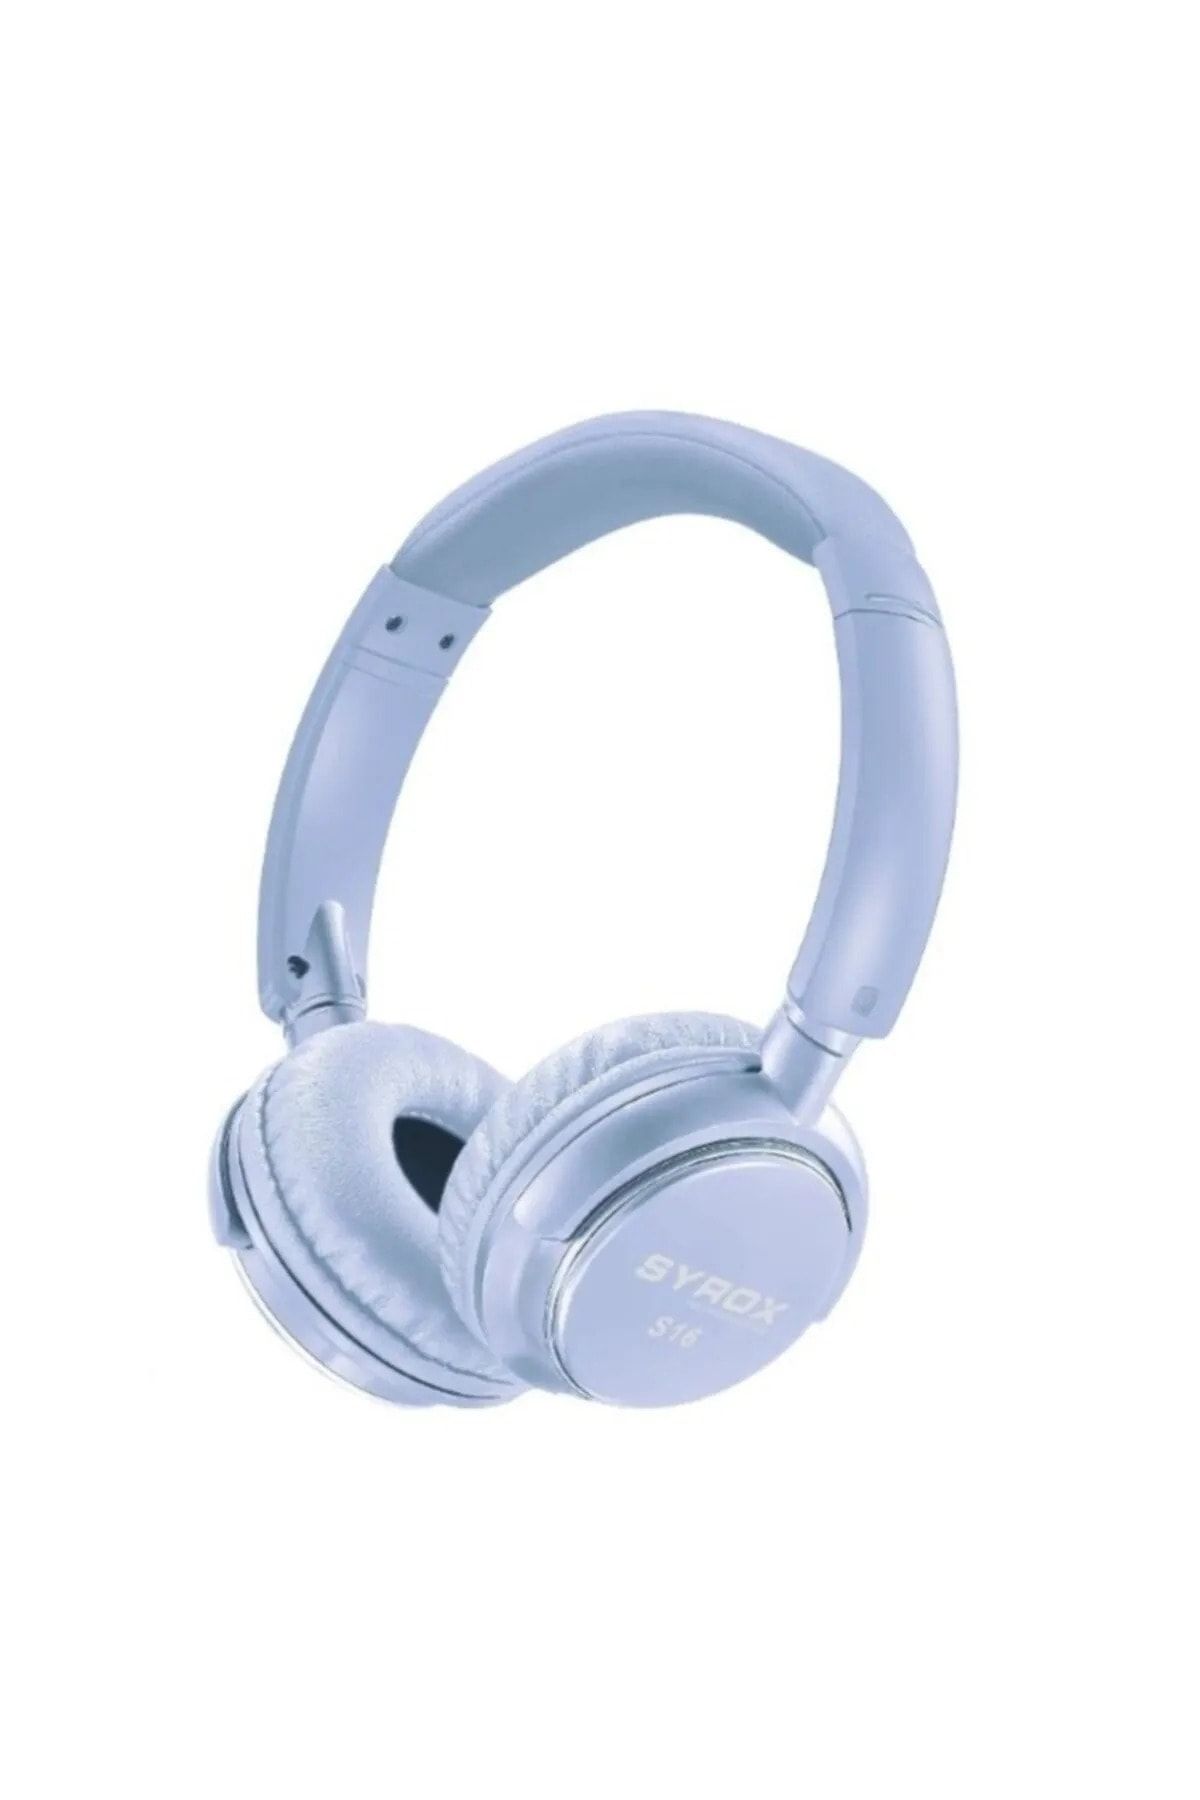 Syrox Kafa Boyu Ayarlanabilir Kulaküstü Bluetooth Kulaklık S16